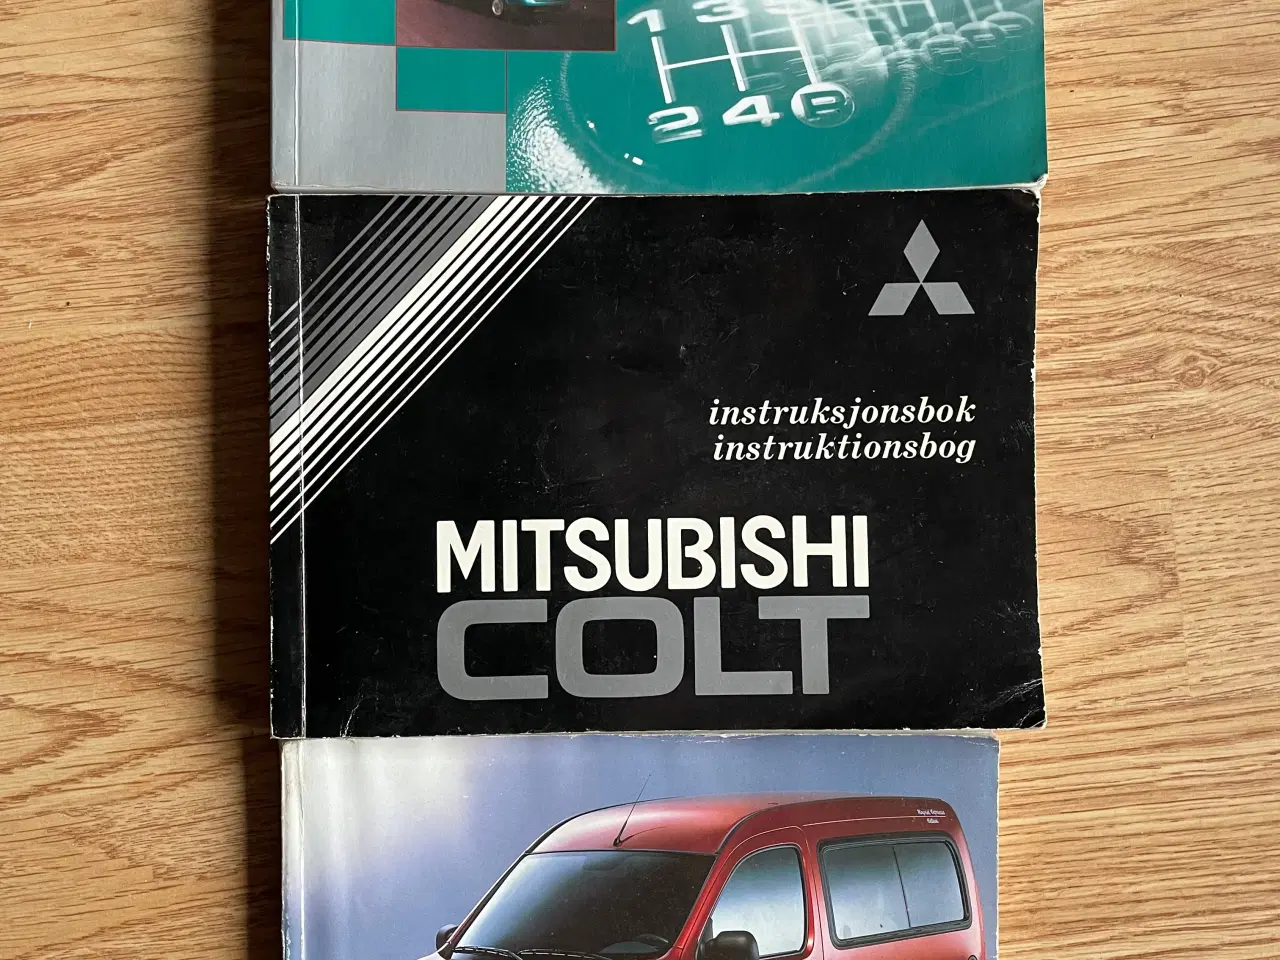 Billede 1 - Instruktionsbog Audi A6, Mitsu. Colt & Ren. Kangoo